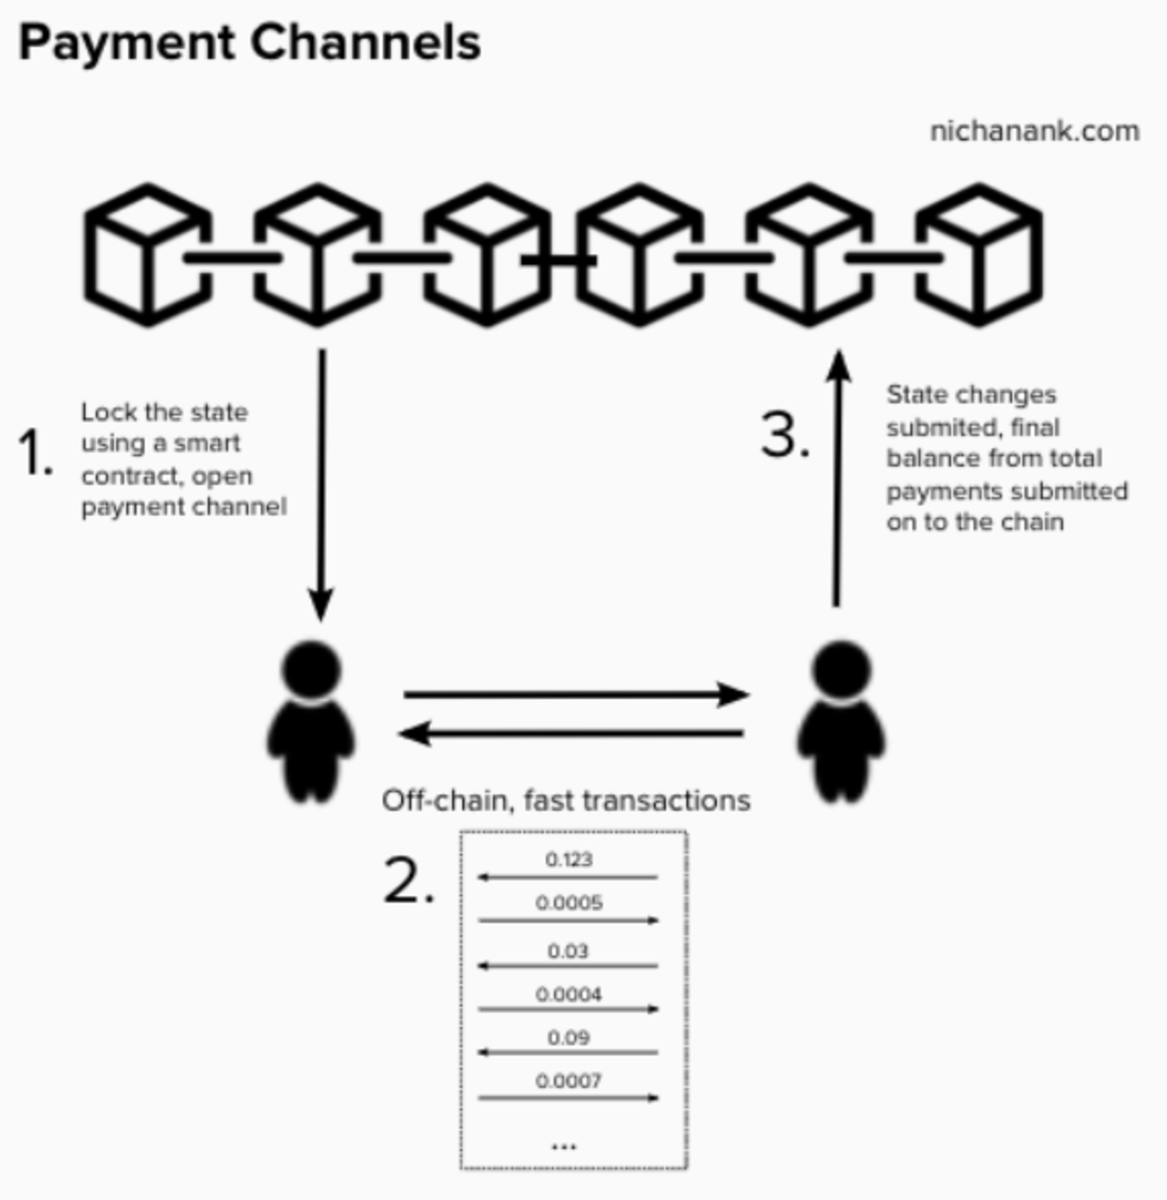 Image via https://www.nichanank.com/blog/2019/1/5/bitcoin-scaling-lightning-network-micropayments